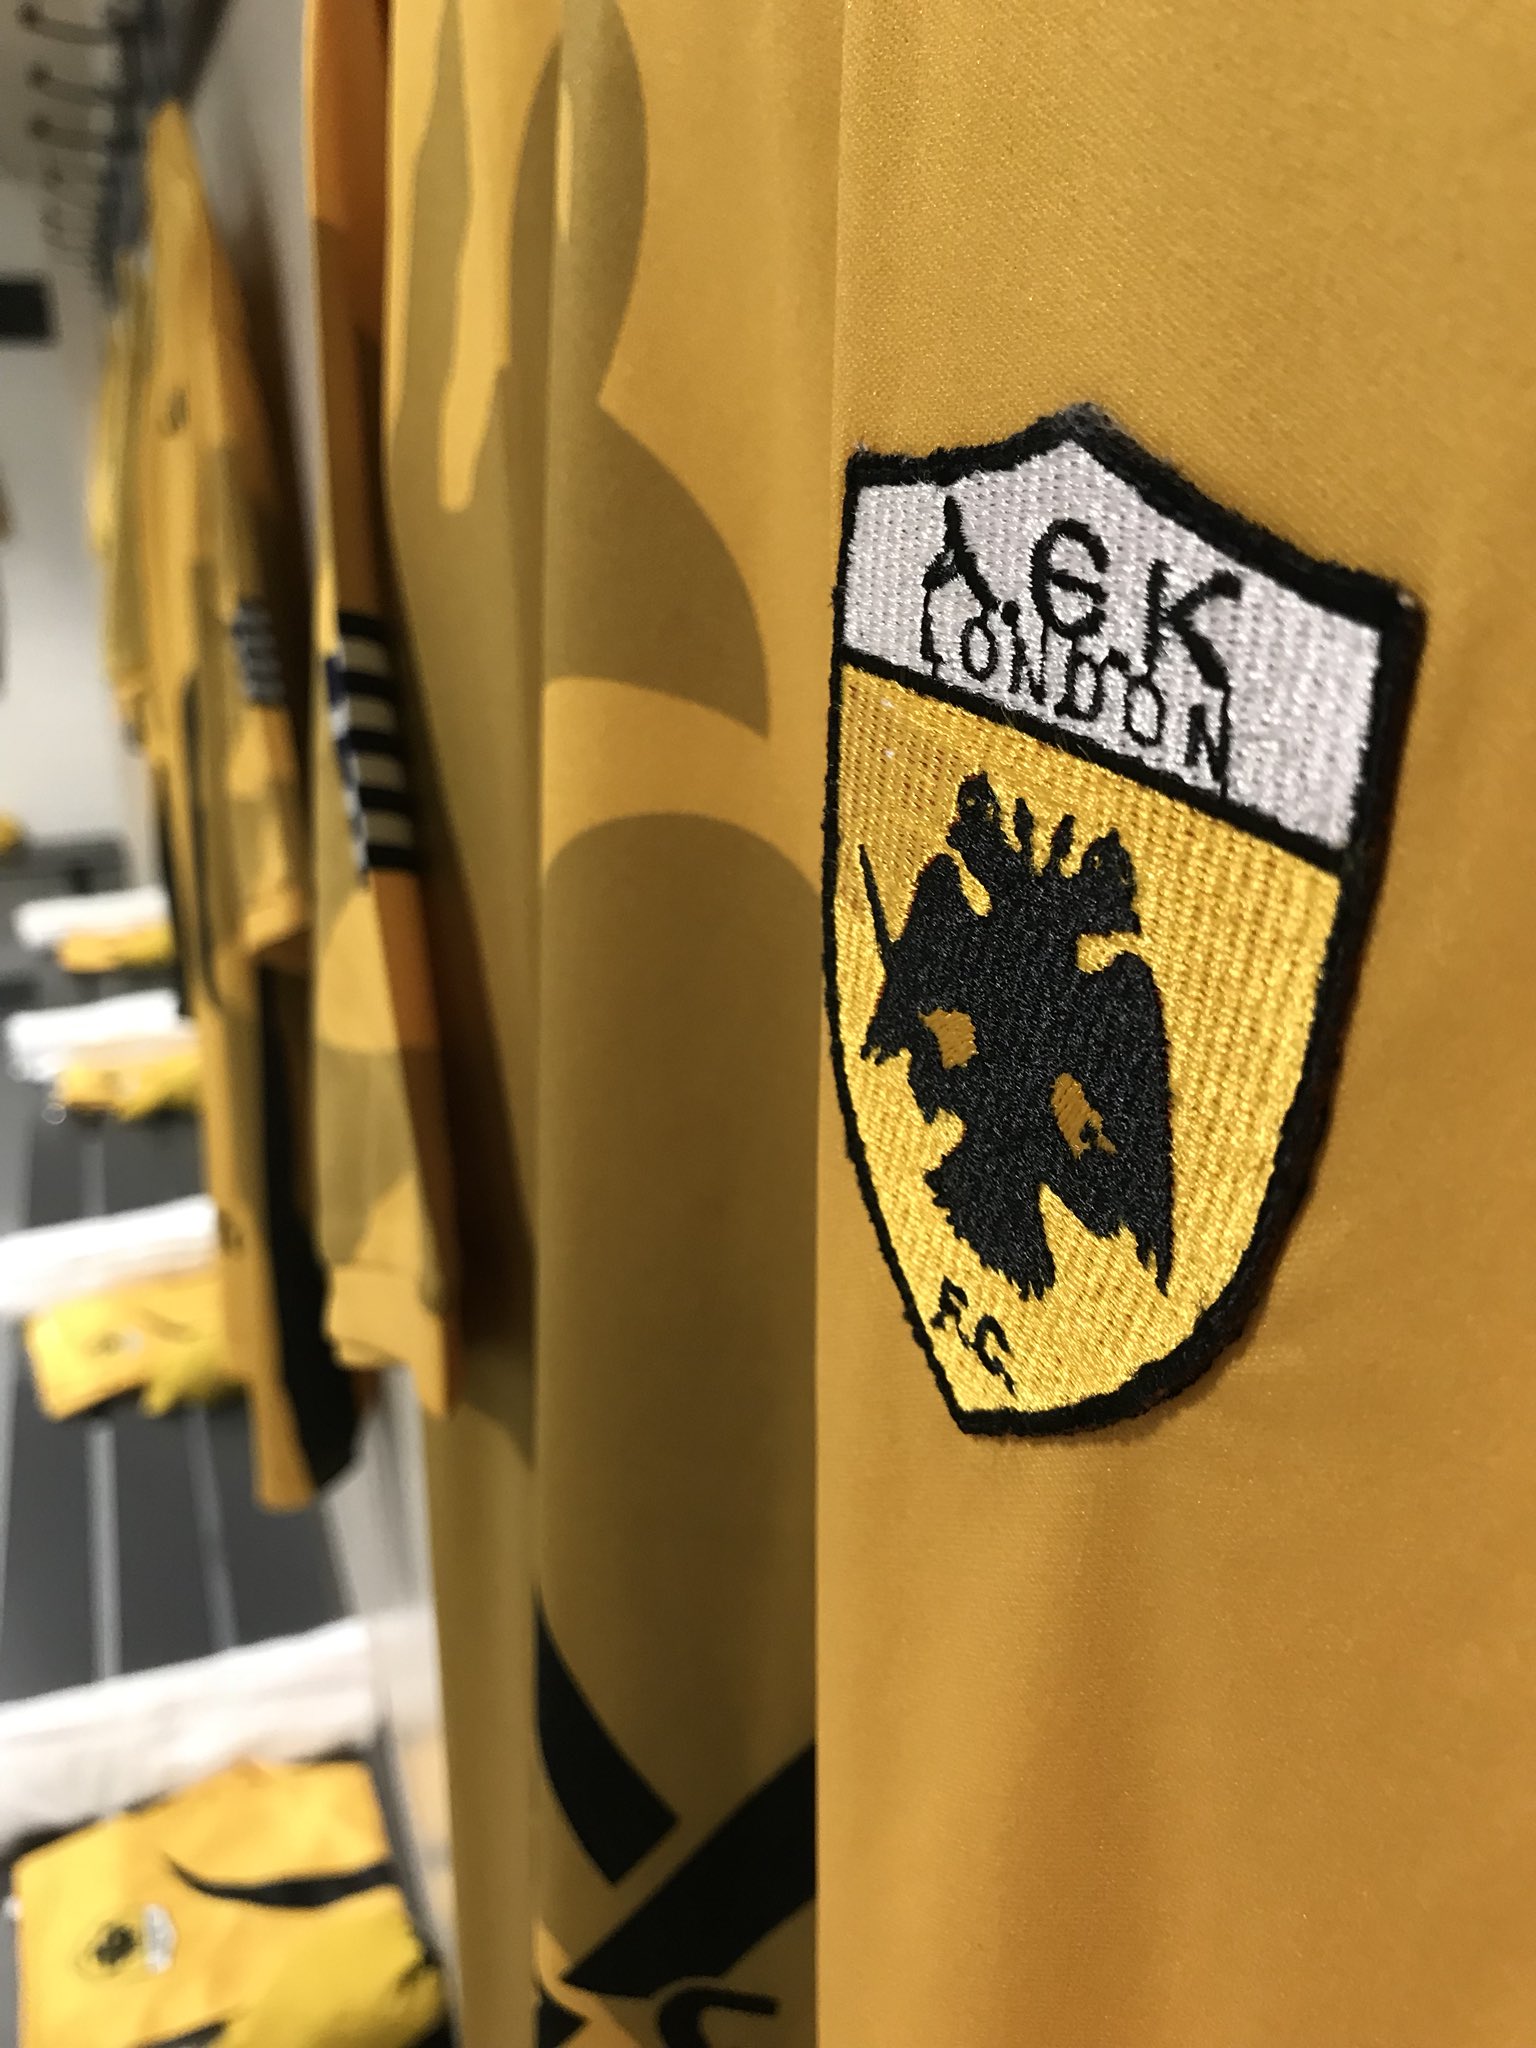 AEK London FC